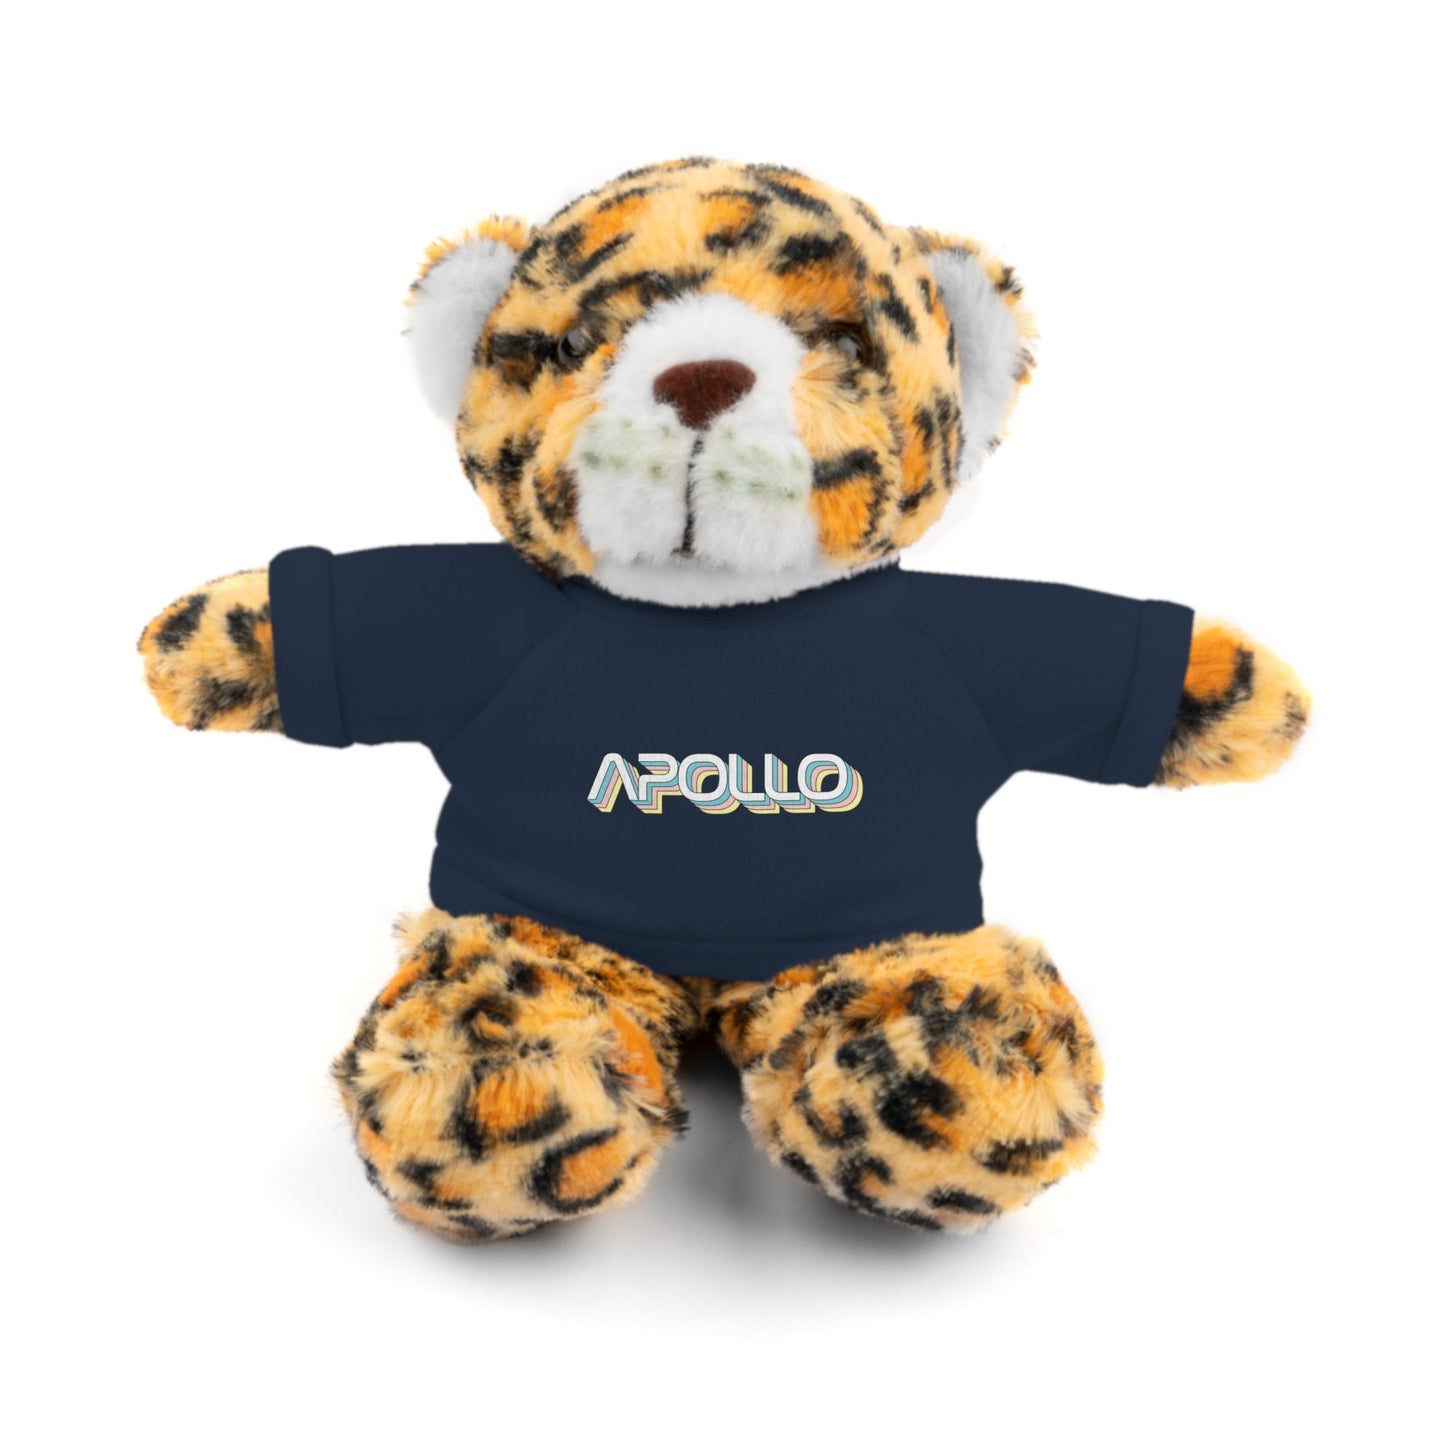 Apollo Pastel Stuffed Animal